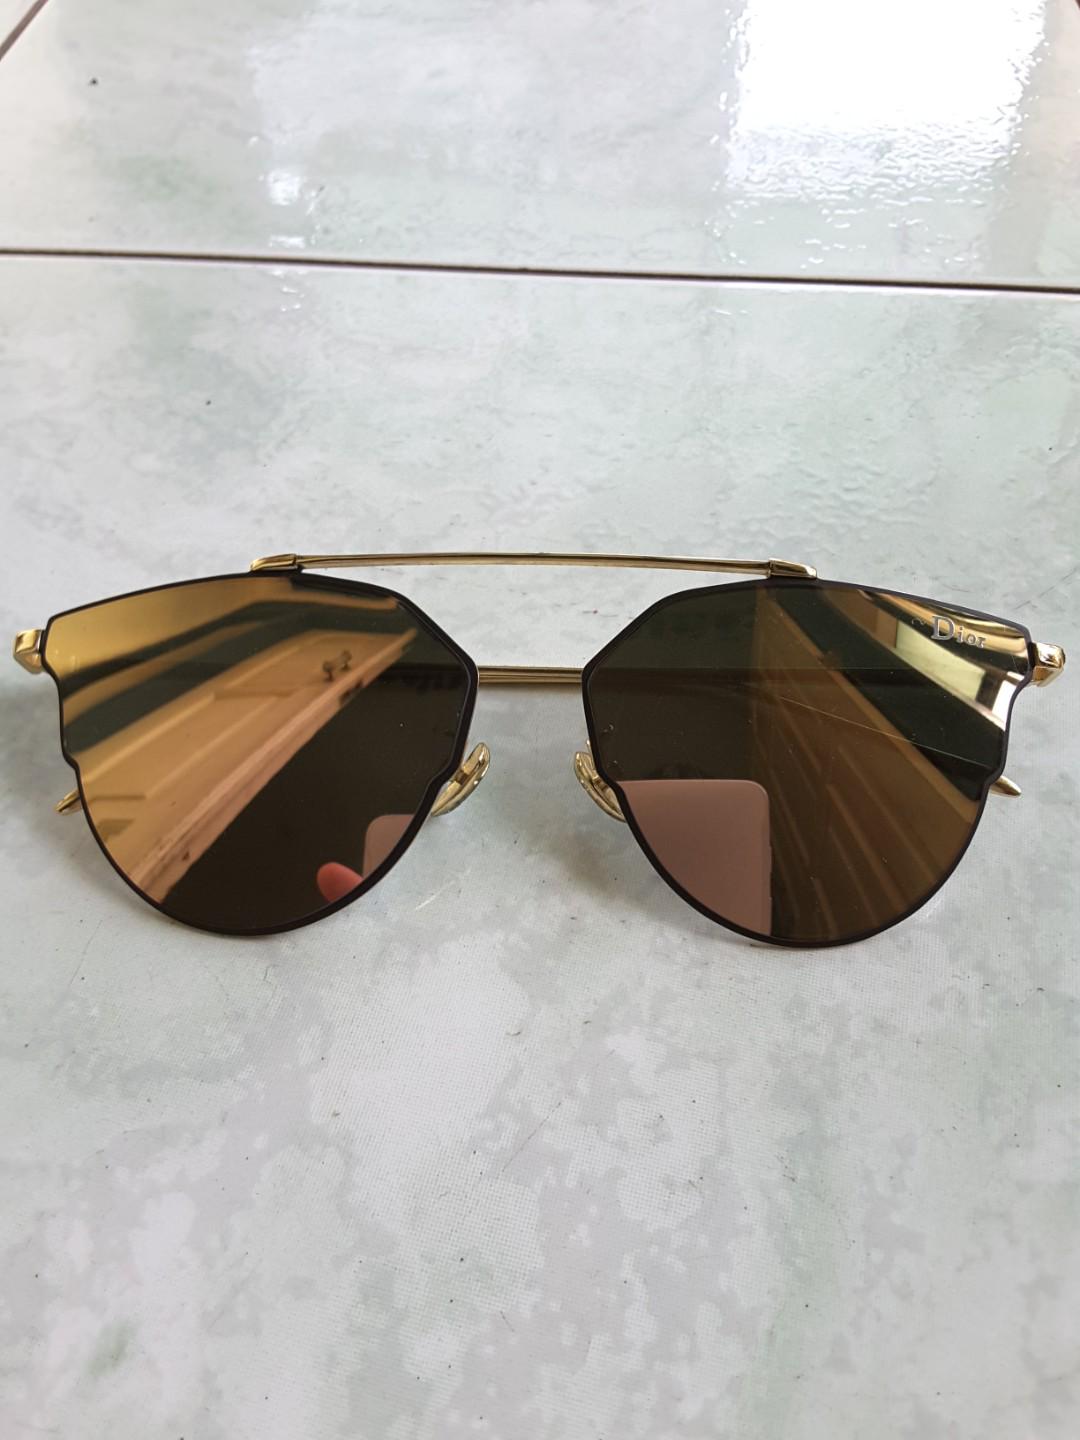 dior sunglasses women 2018, OFF 73%,Buy!